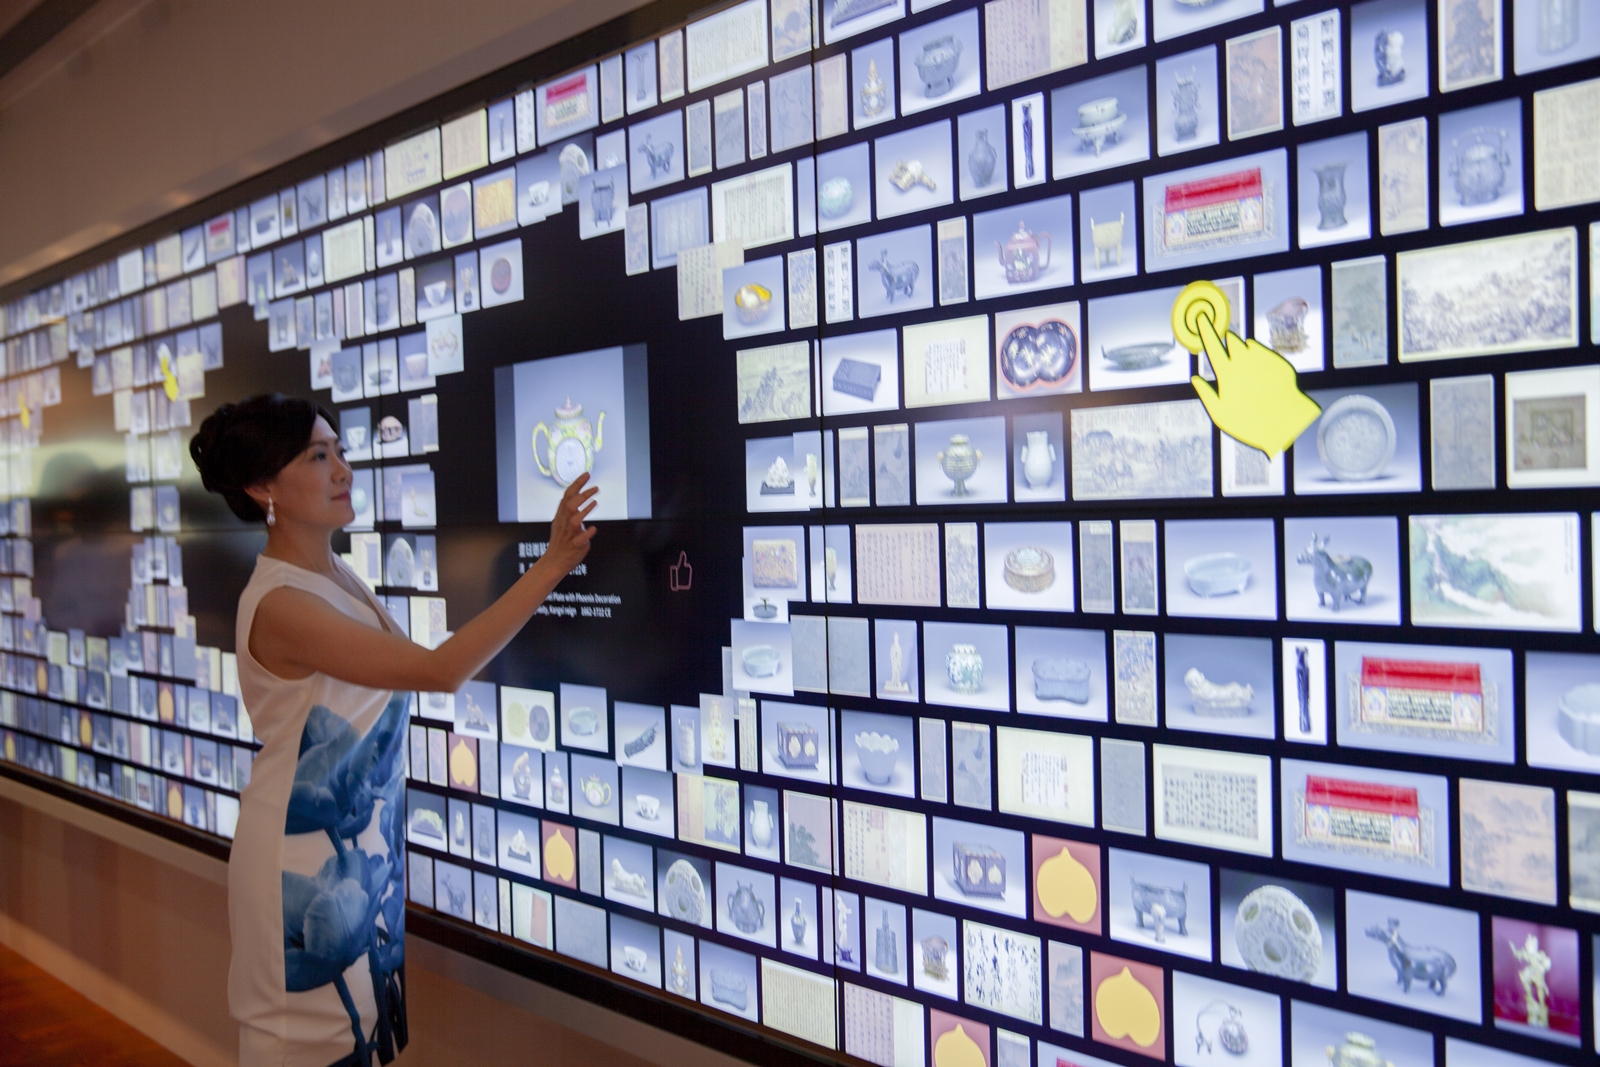 Penonton dapat mengklik bingkai berbentuk persik di dinding interaktif sesuai dengan minat pribadi mereka, dan kemudian dengan mudah menikmati peninggalan budaya Museum Taiwan. (Foto diambil dari situs web Museum Istana)